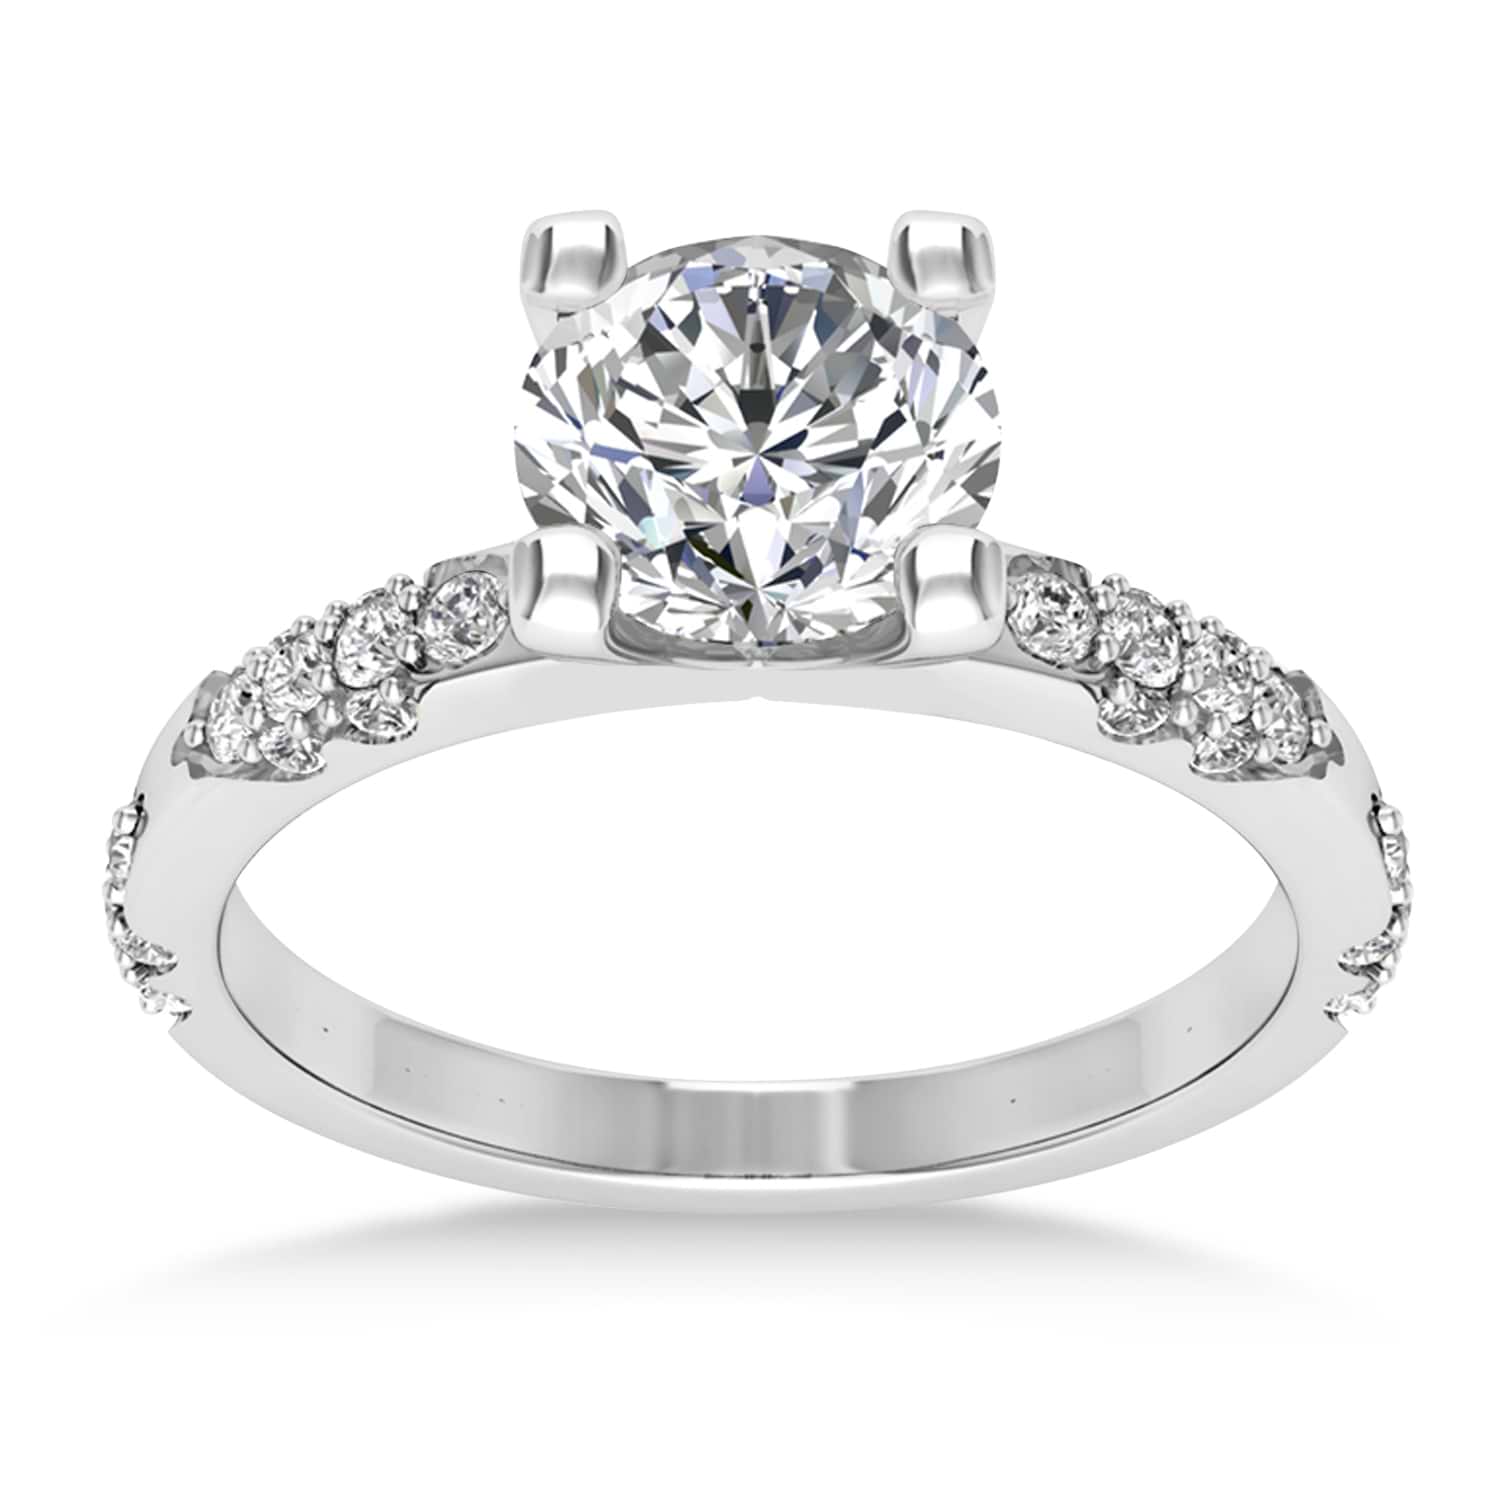 Diamond Prong Engagement Ring Platinum (0.32ct)